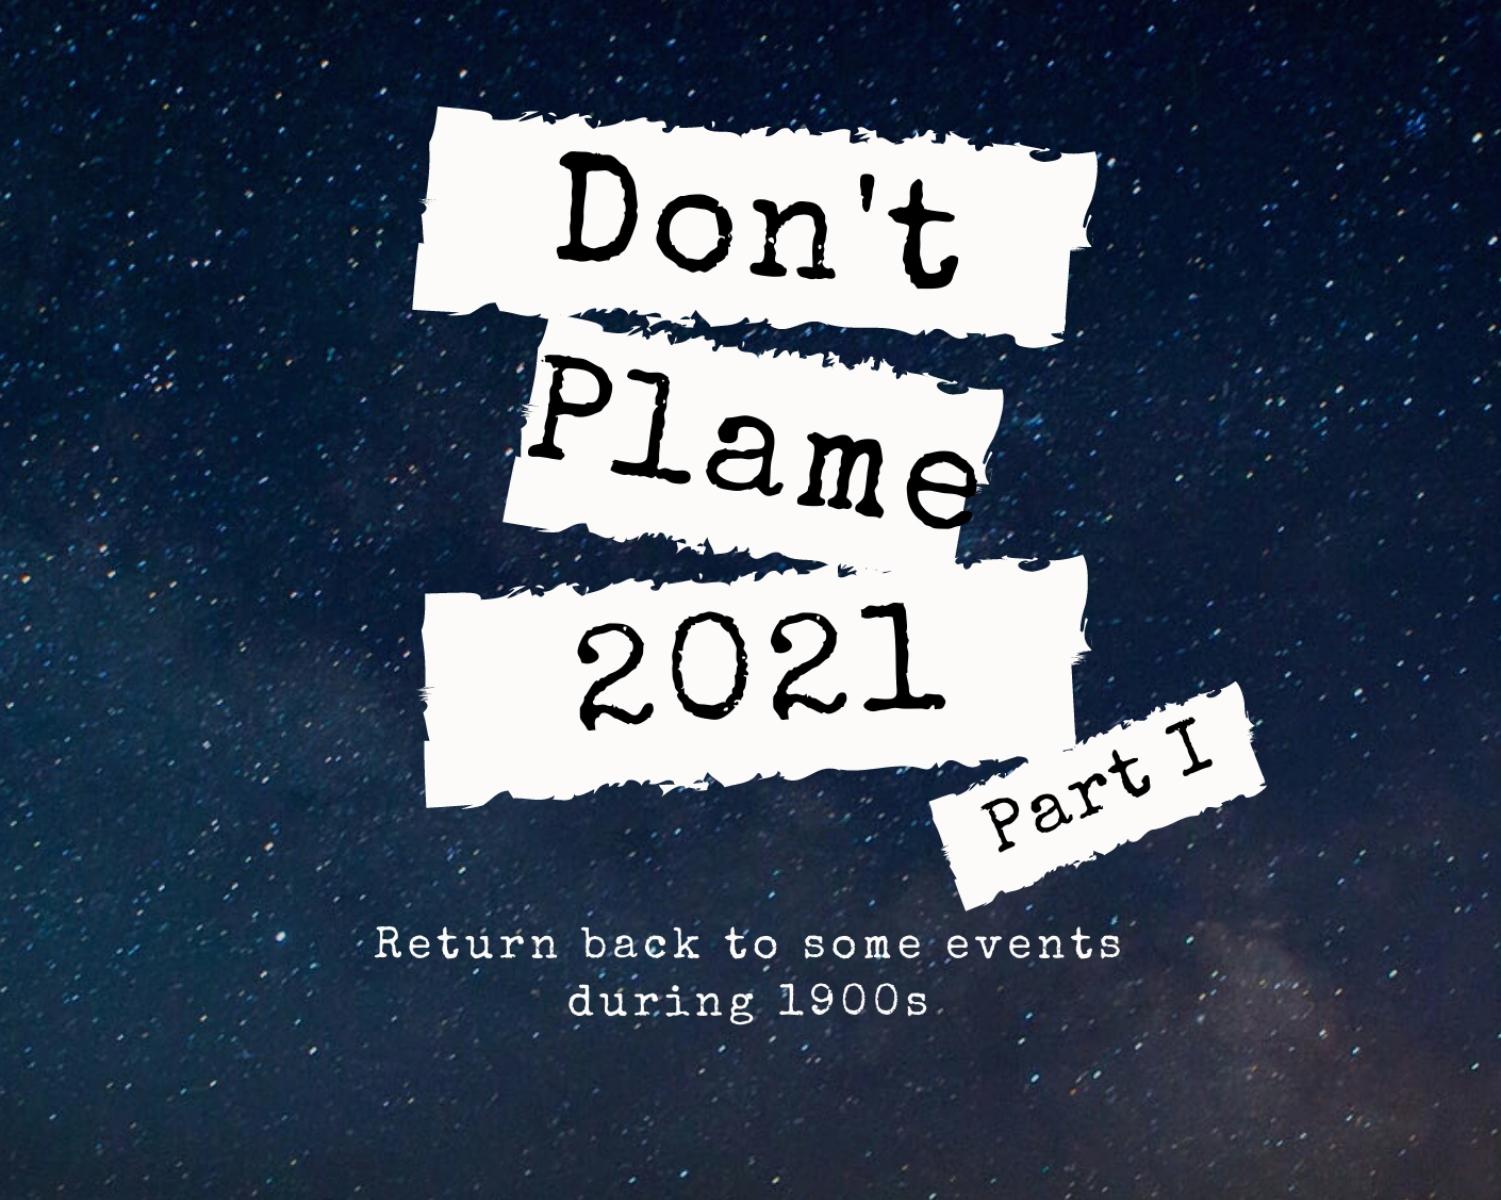 Don't Plame 2021 Pt1